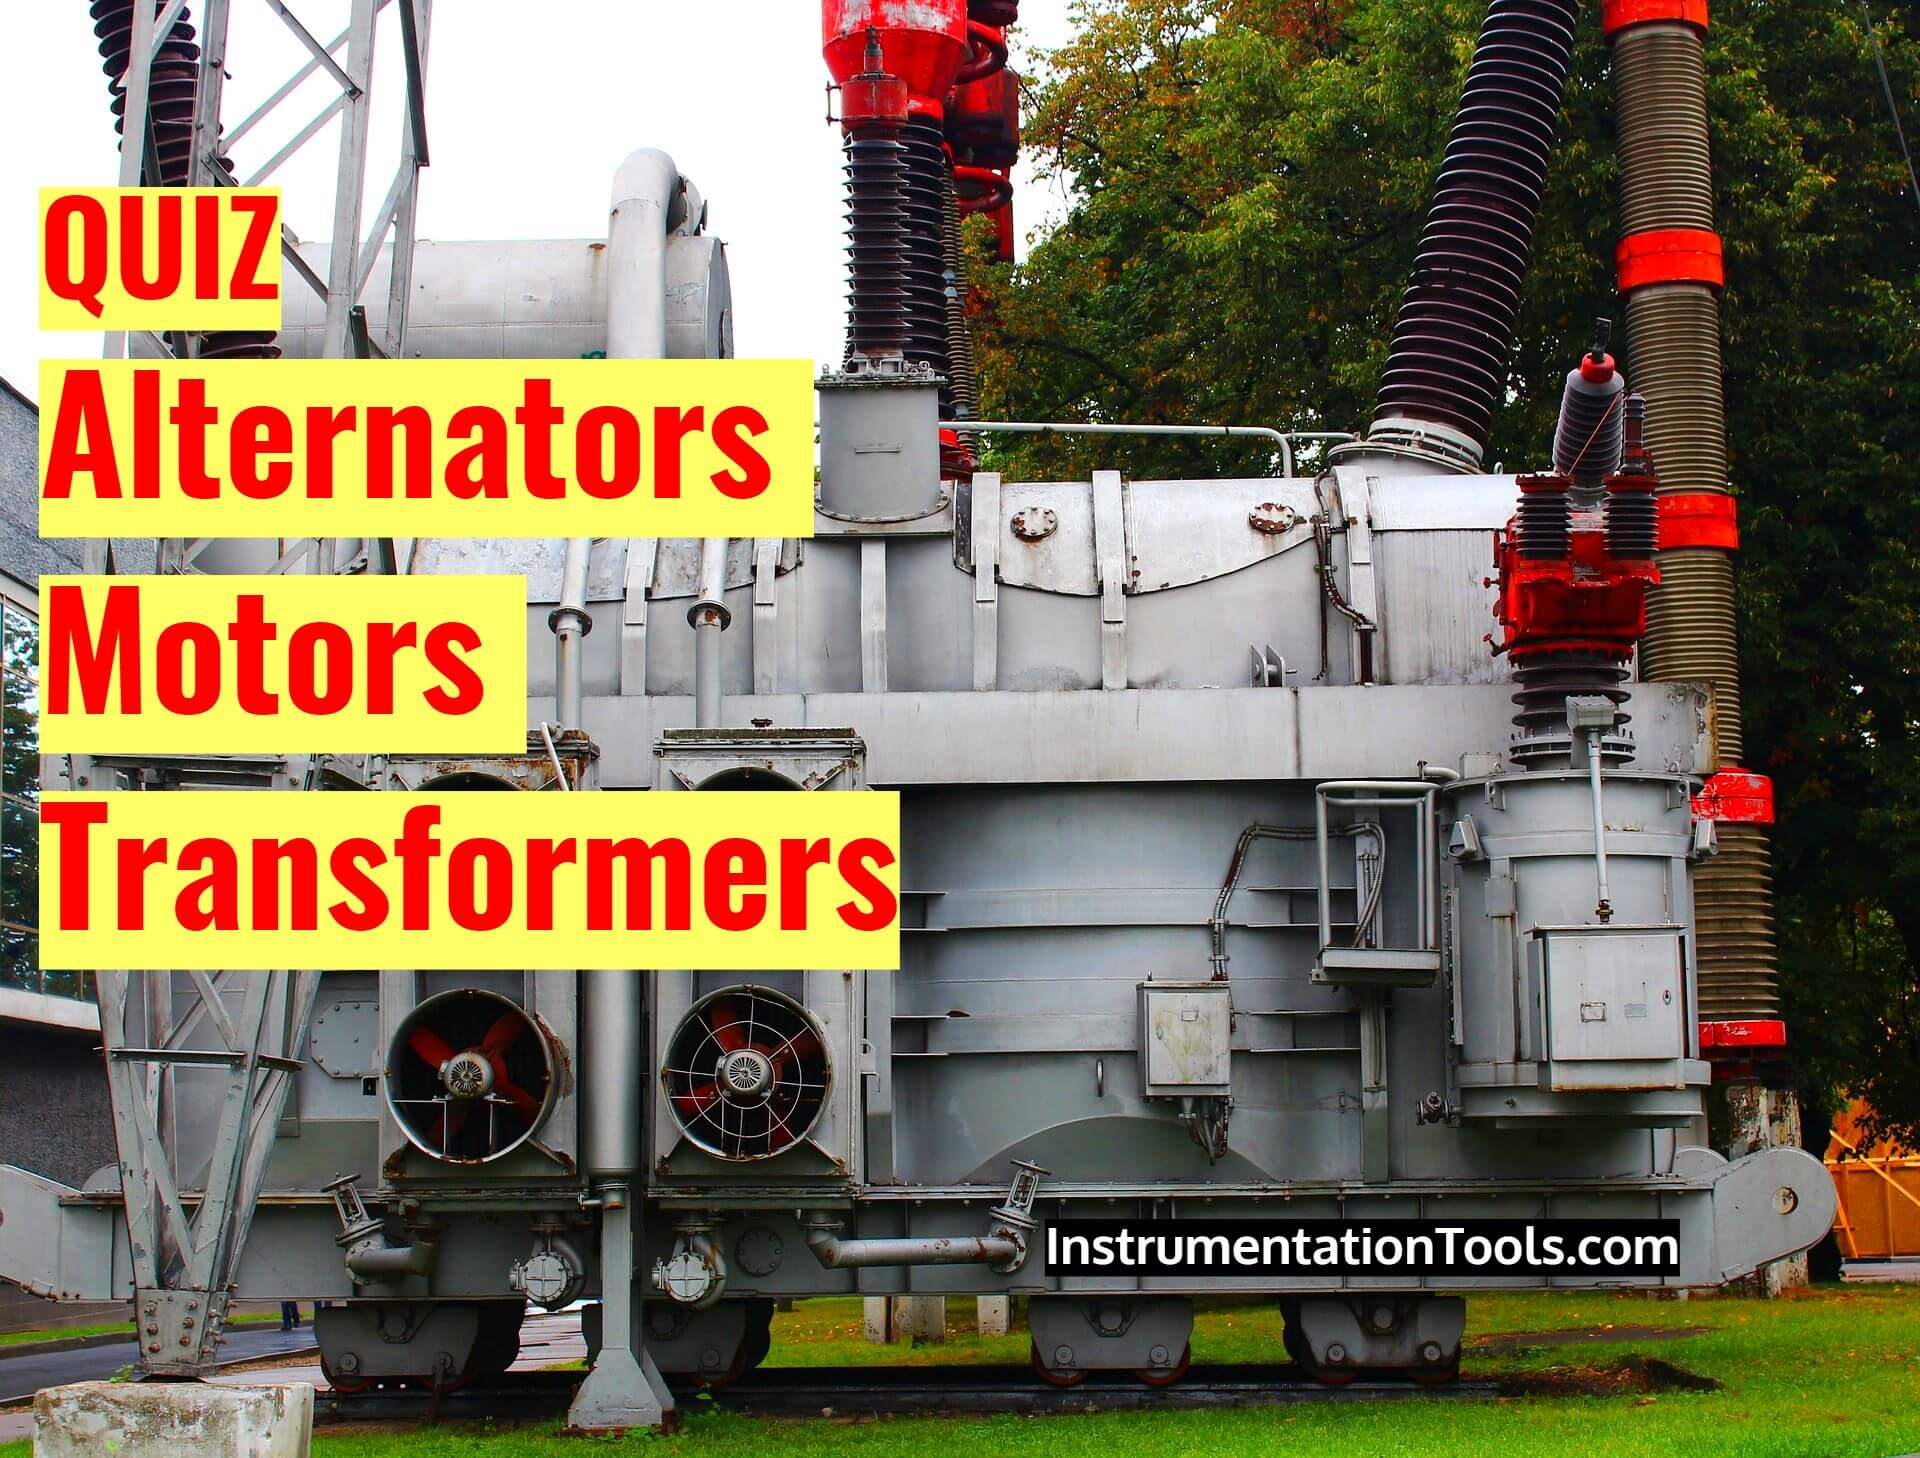 Quiz on Alternators, Motors, and Transformers